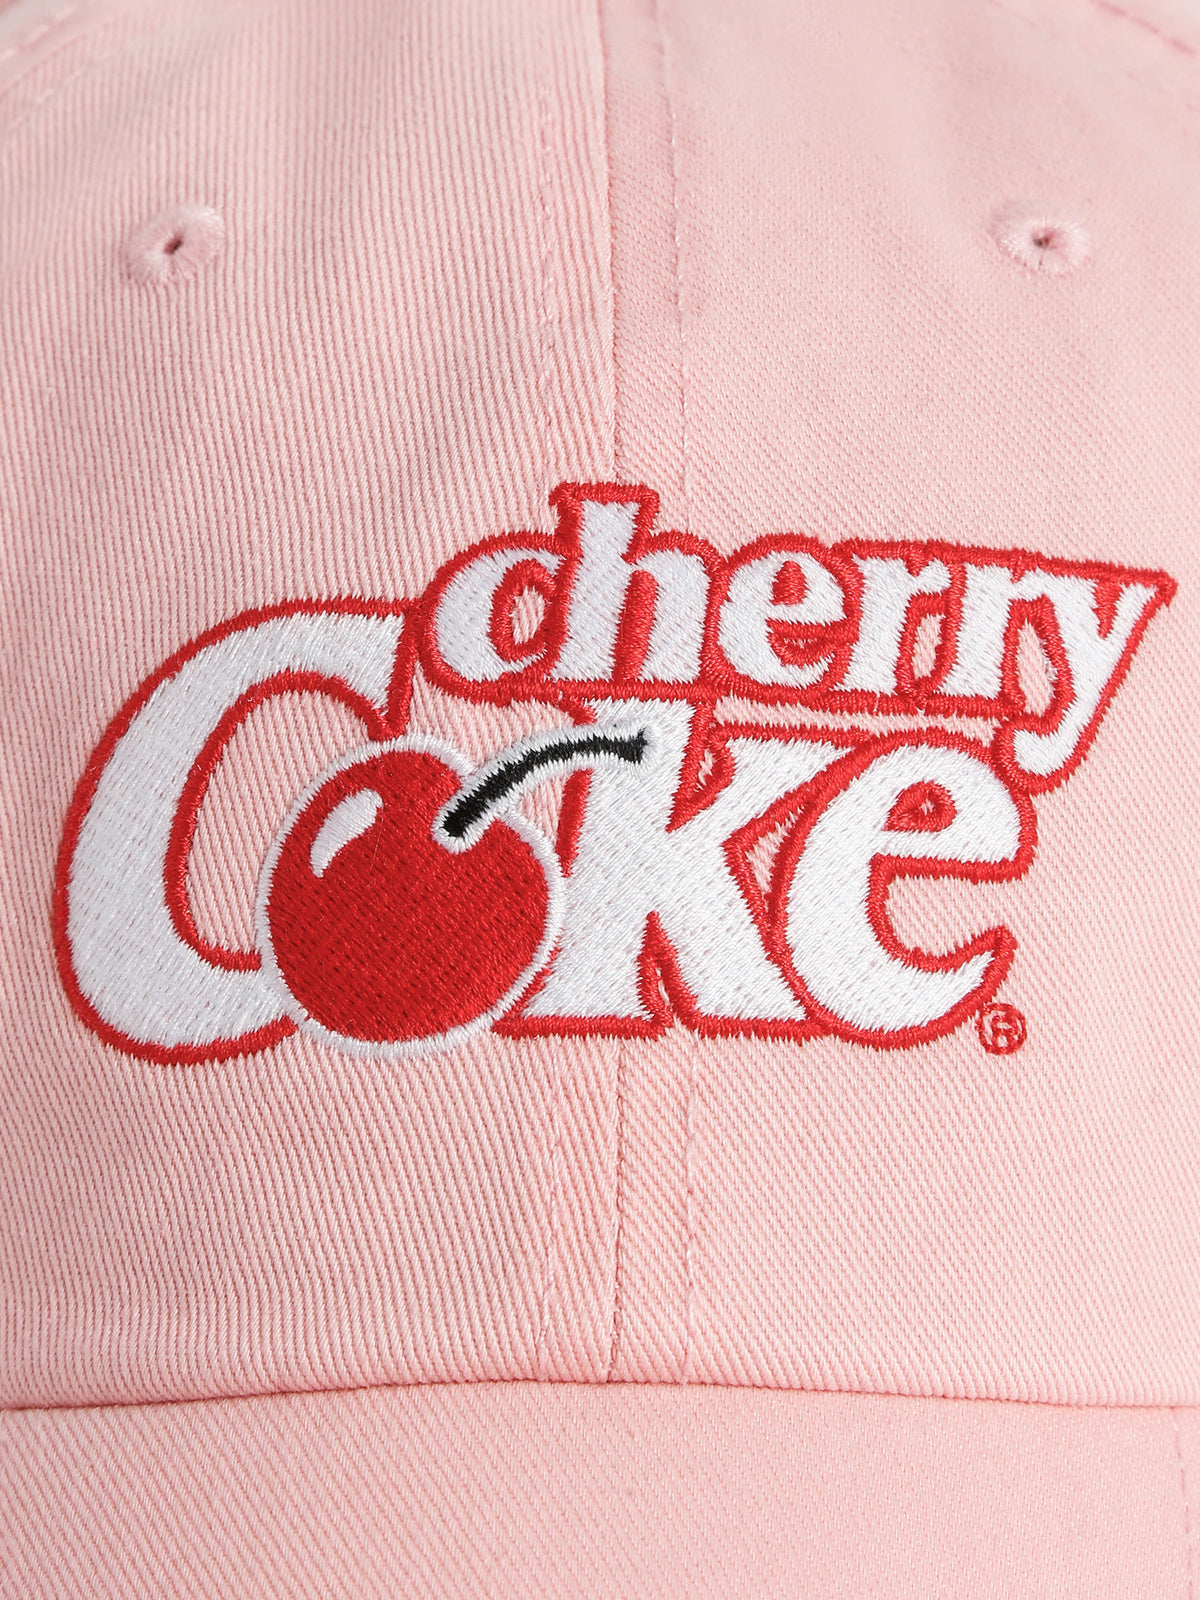 Cherry Coke Ball Park Cap in Club Pink